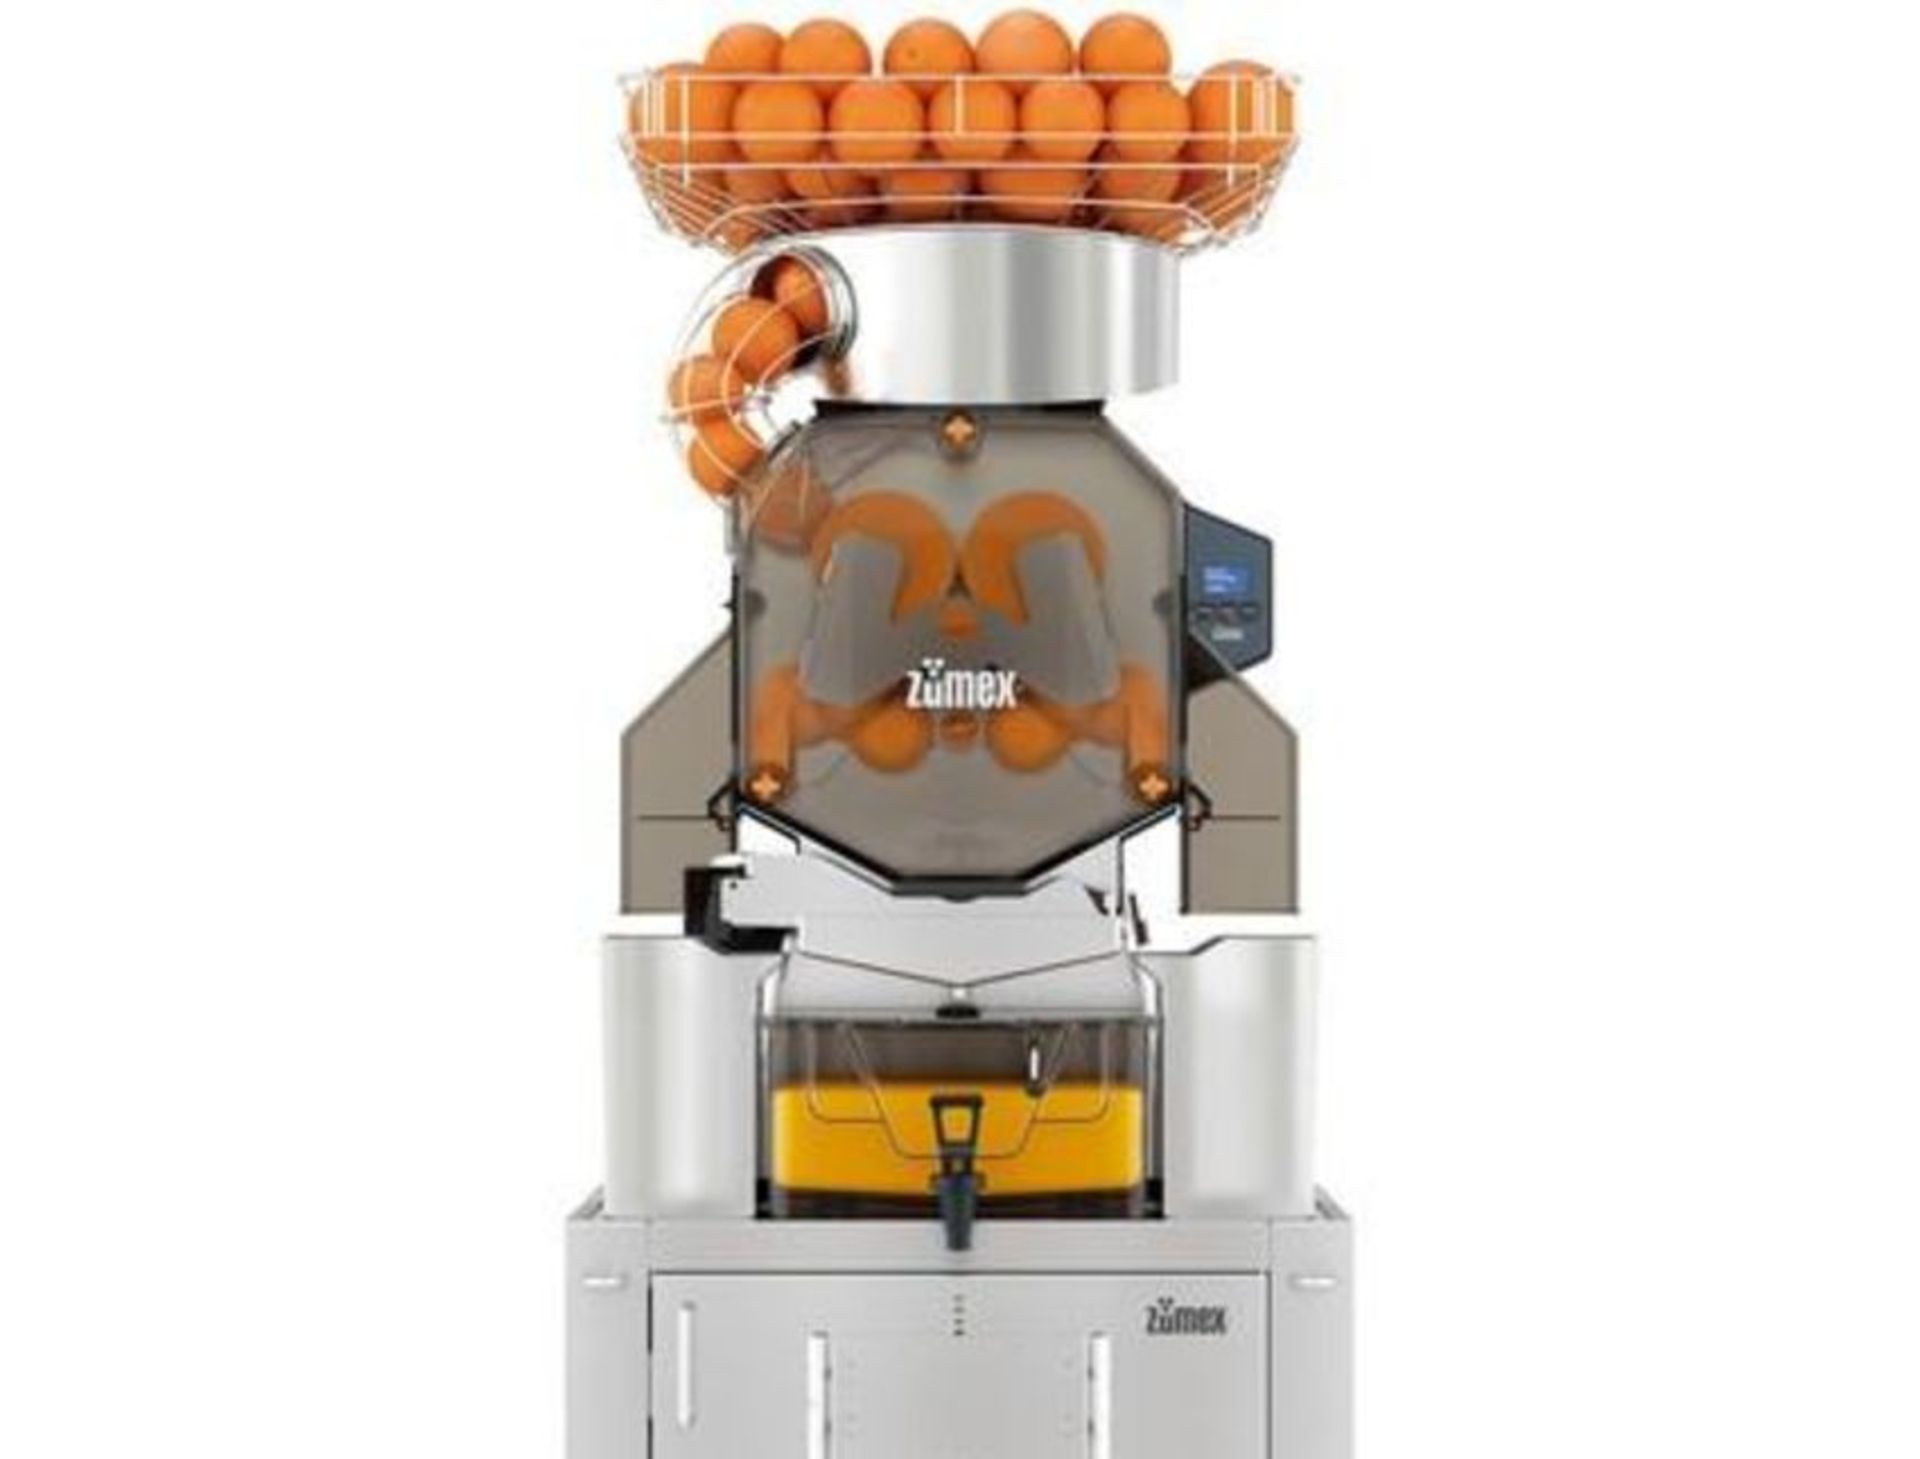 1 x Zumex Speed S +Plus Self-Service Podium Commercial Citrus Juicer - Manufactured in 2018 - - Image 15 of 20